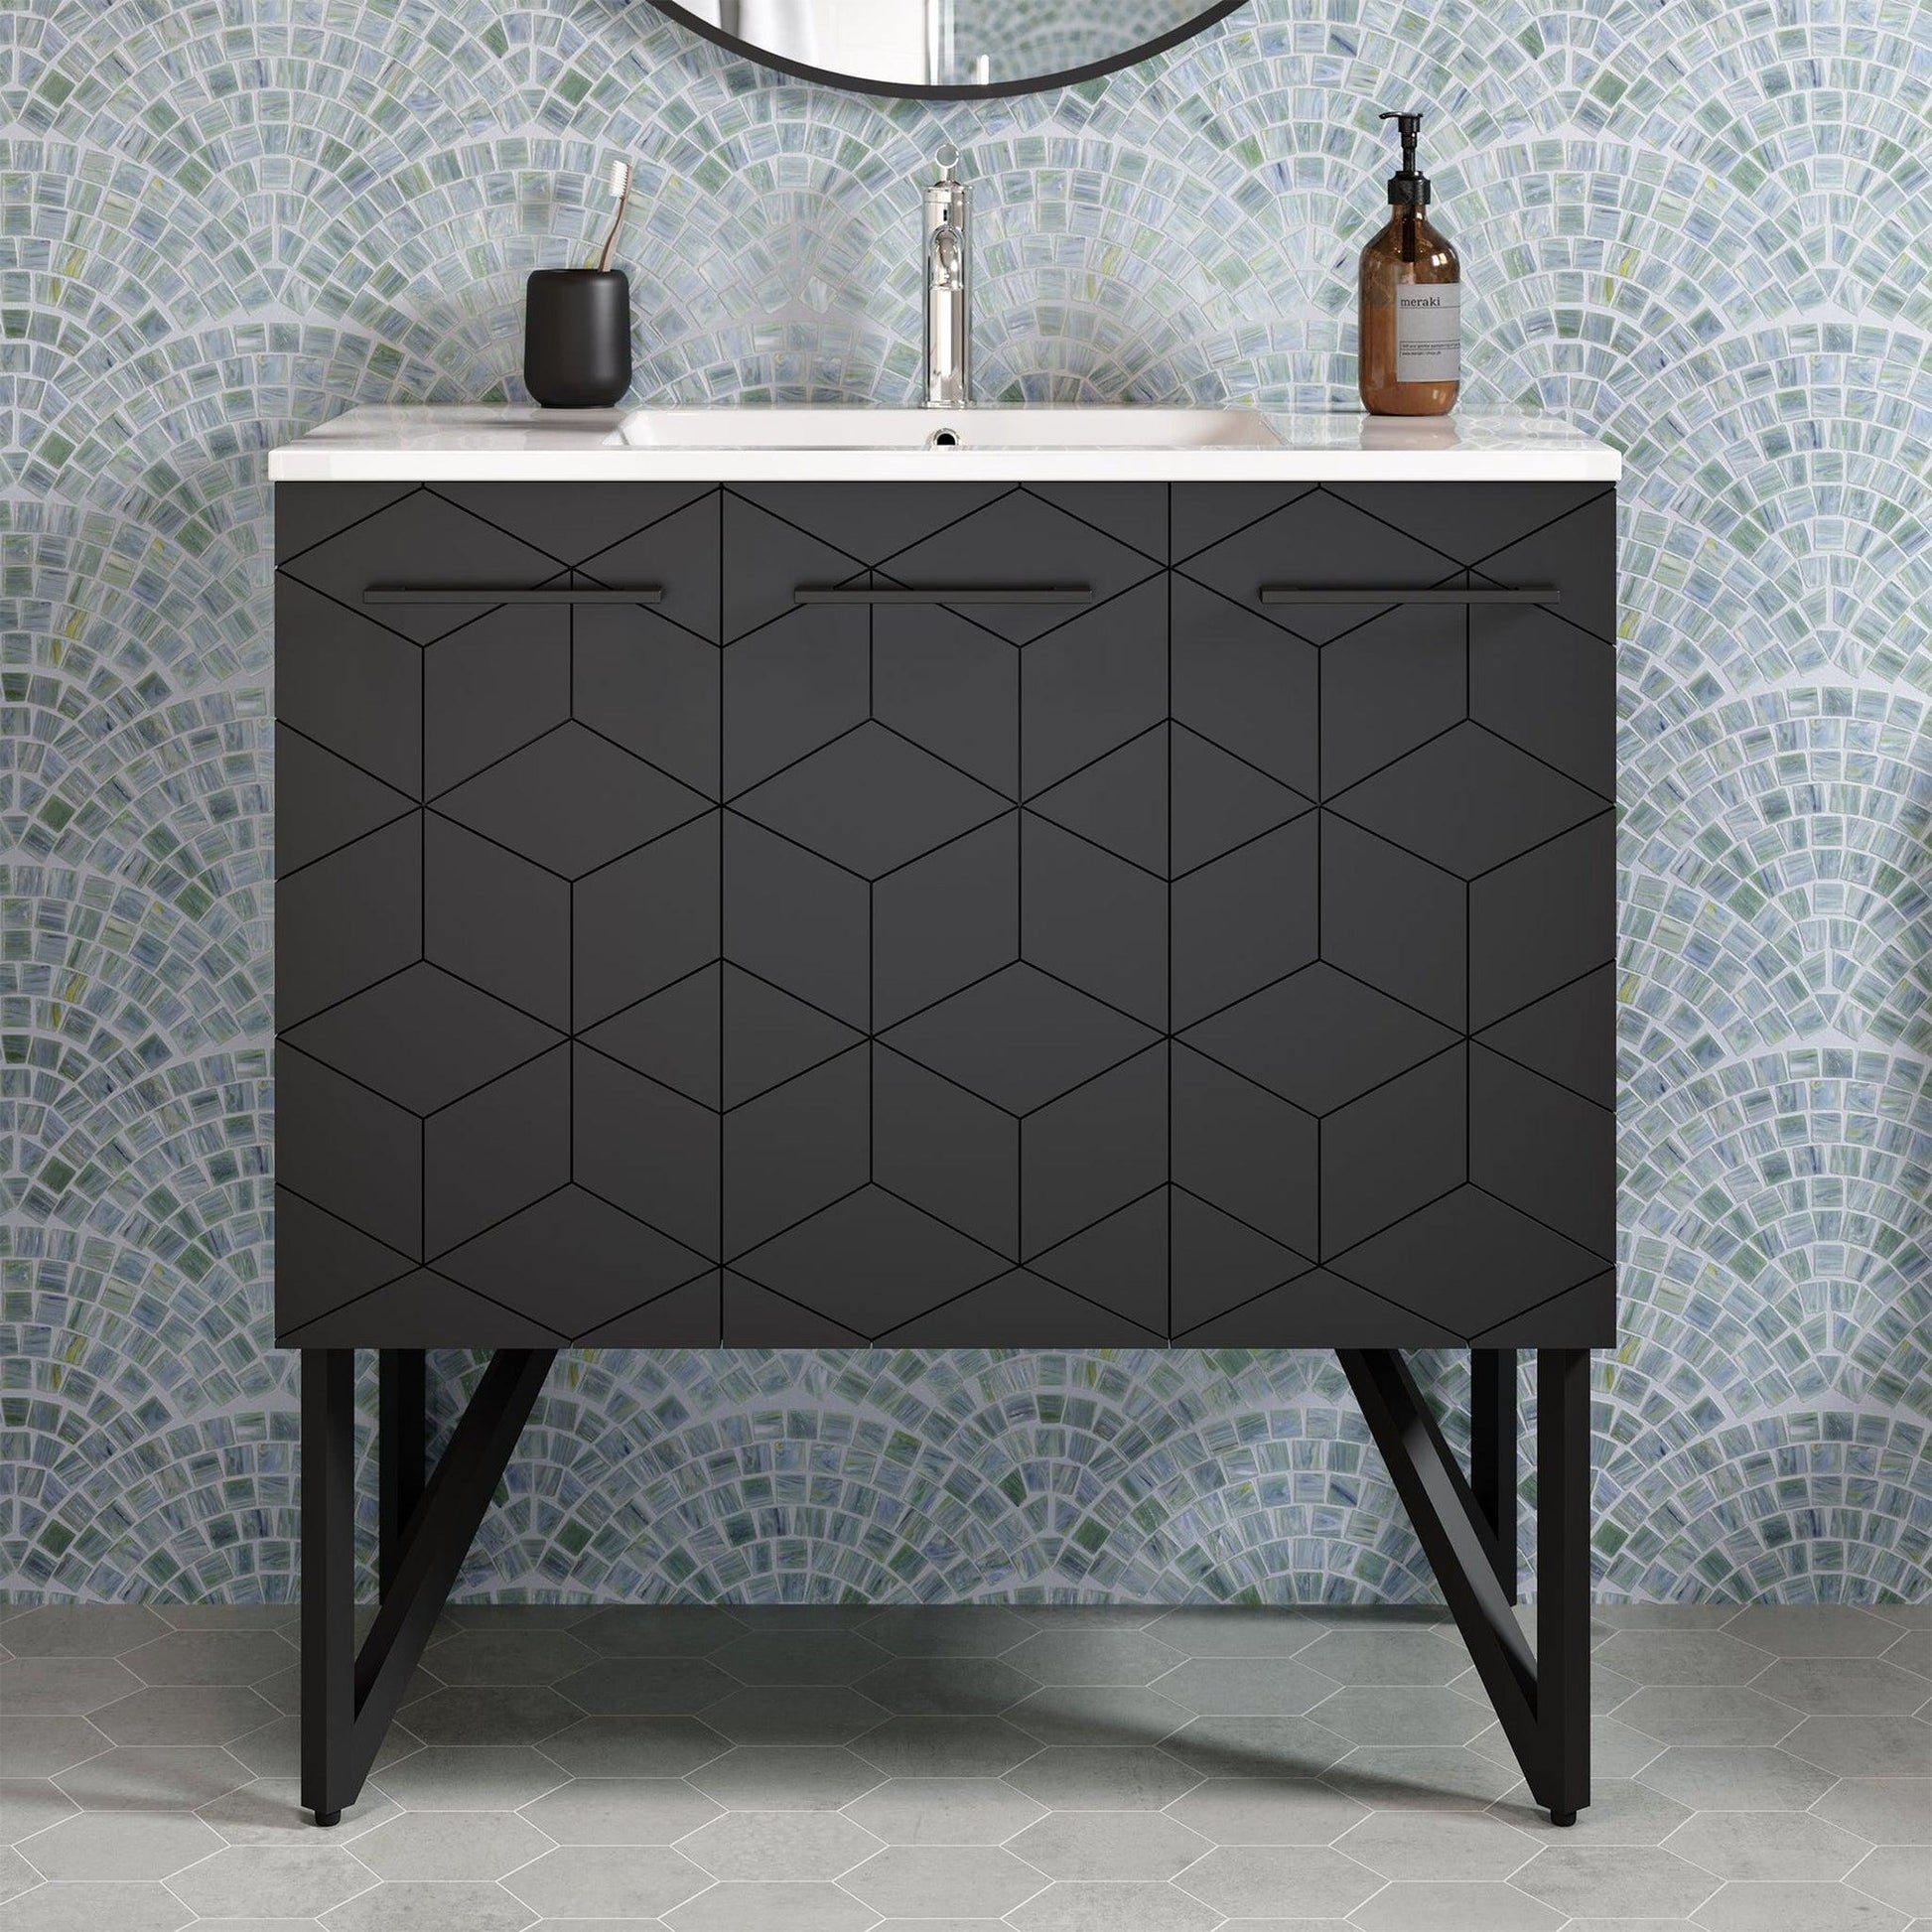 Swiss Madison Annecy 36" x 35" Freestanding Phantom Black Bathroom Vanity With Ceramic Single Sink and Stainless Steel Metal Legs